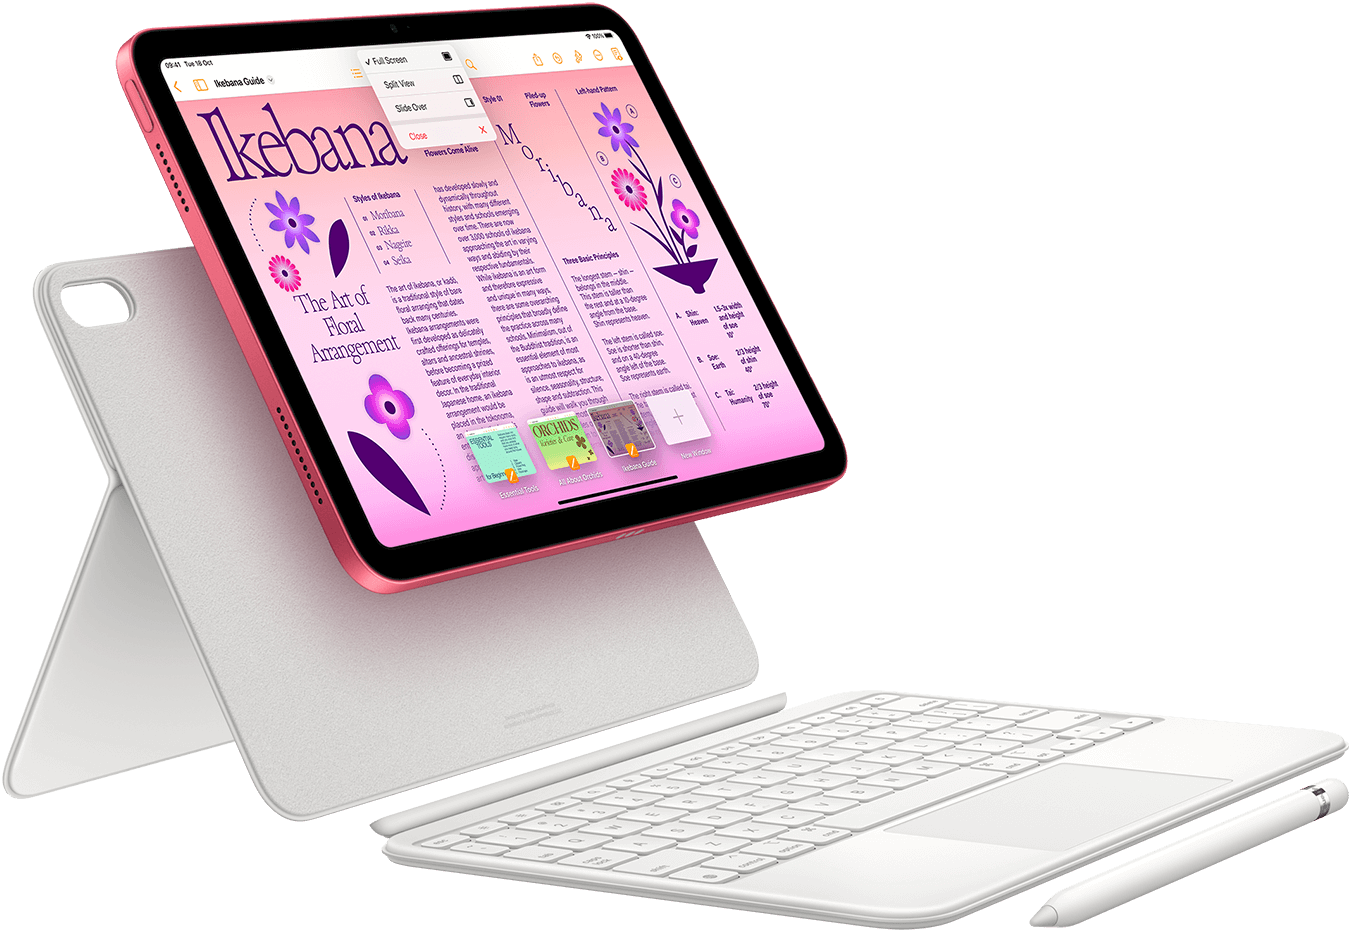 Showcasing iPad, Magic Keyboard Folio and Apple Pencil.